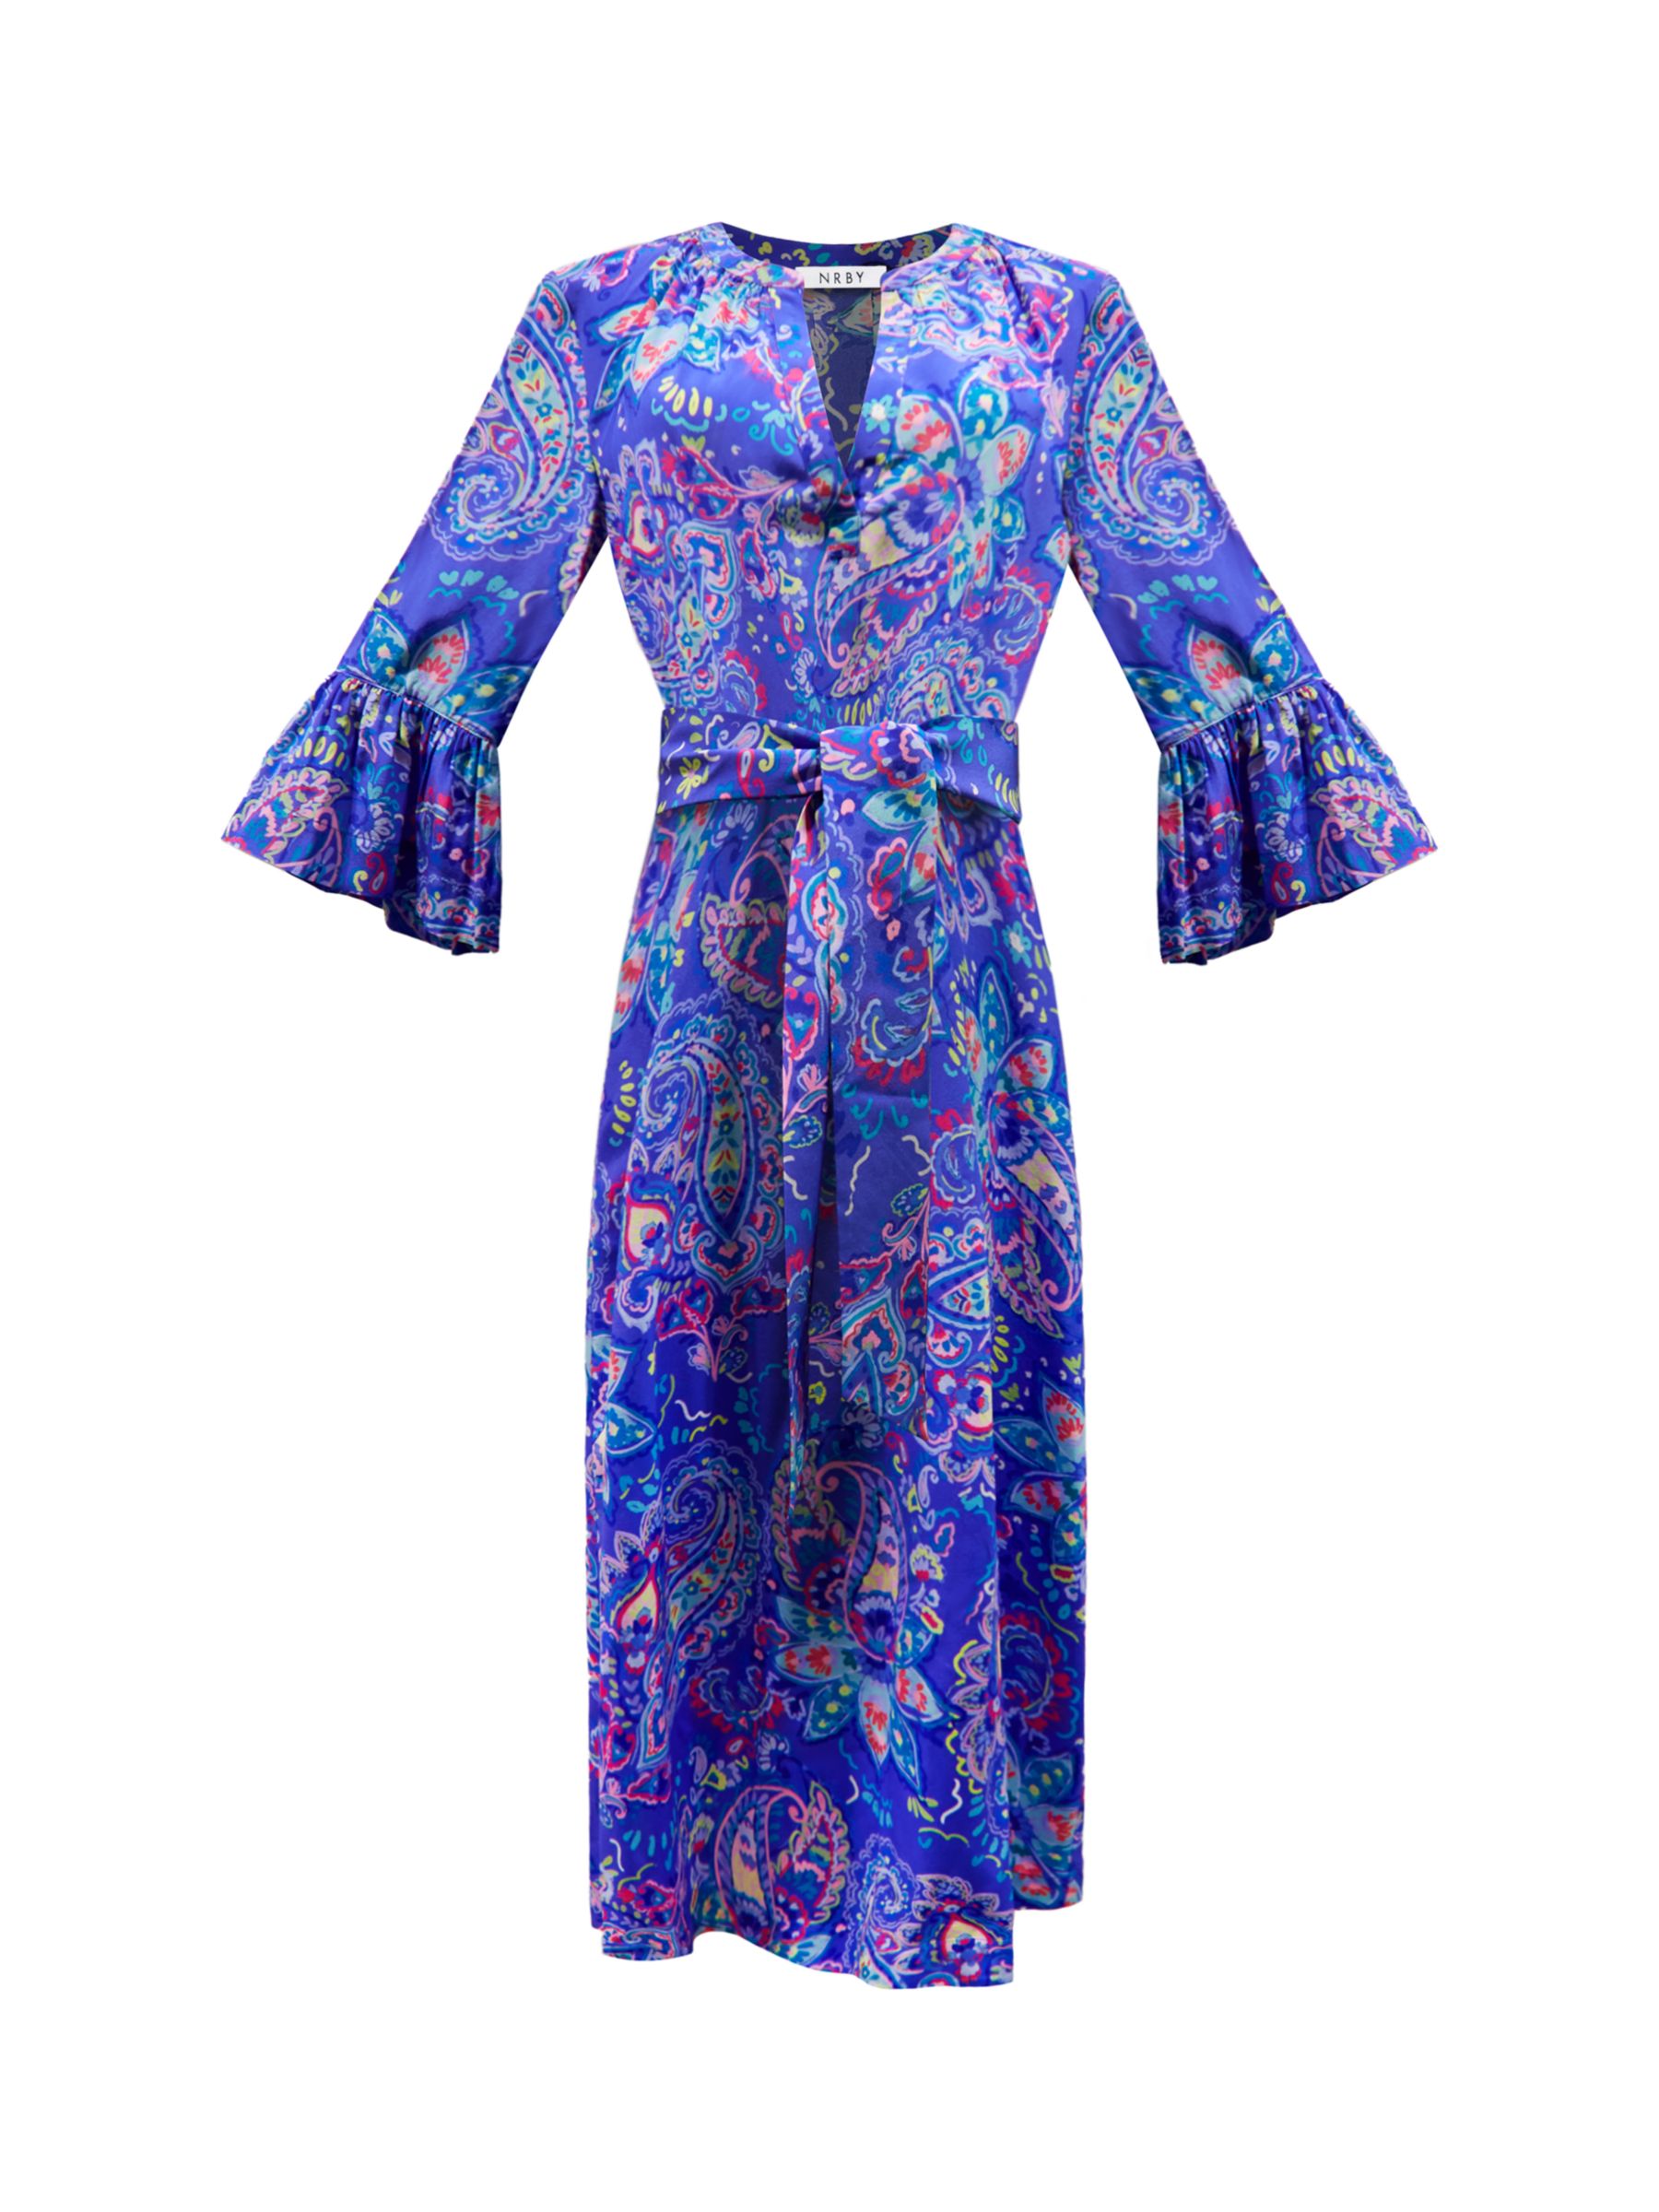 NRBY Penelope Painterley Paisley Silk Dress, Multi, XS